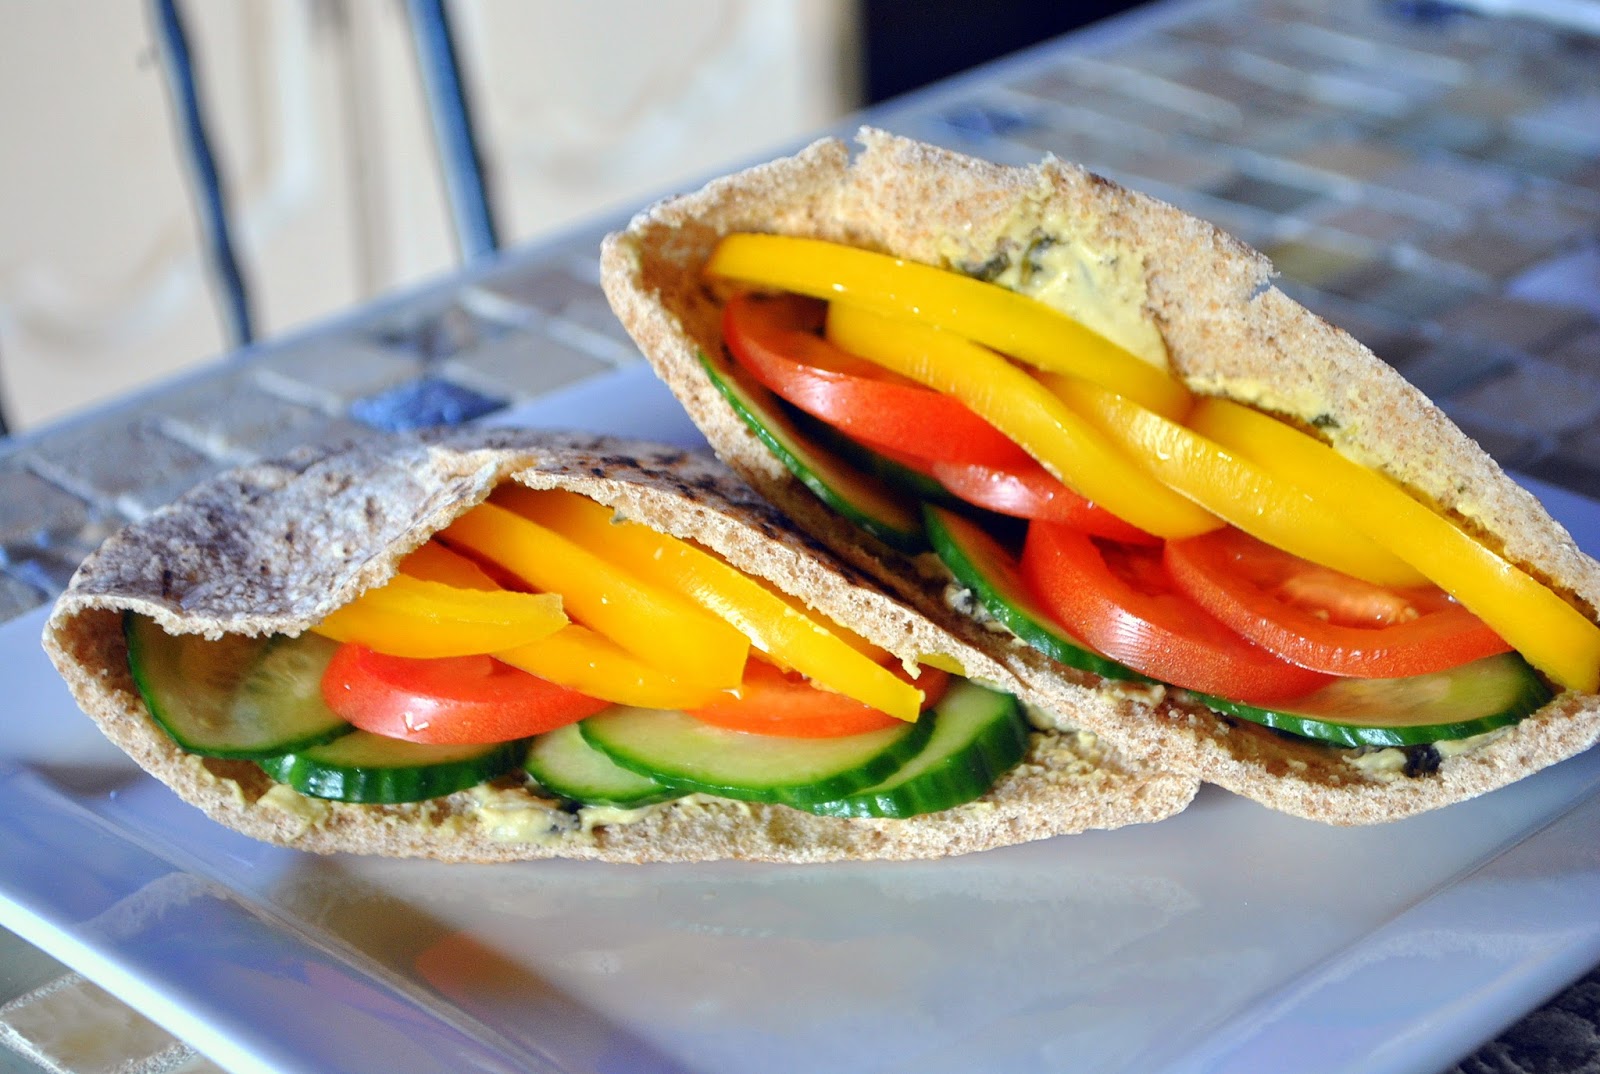 Veggie Pita Sandwich (Sanduíche de Pita com Vegetais) - The Green Dish Blog